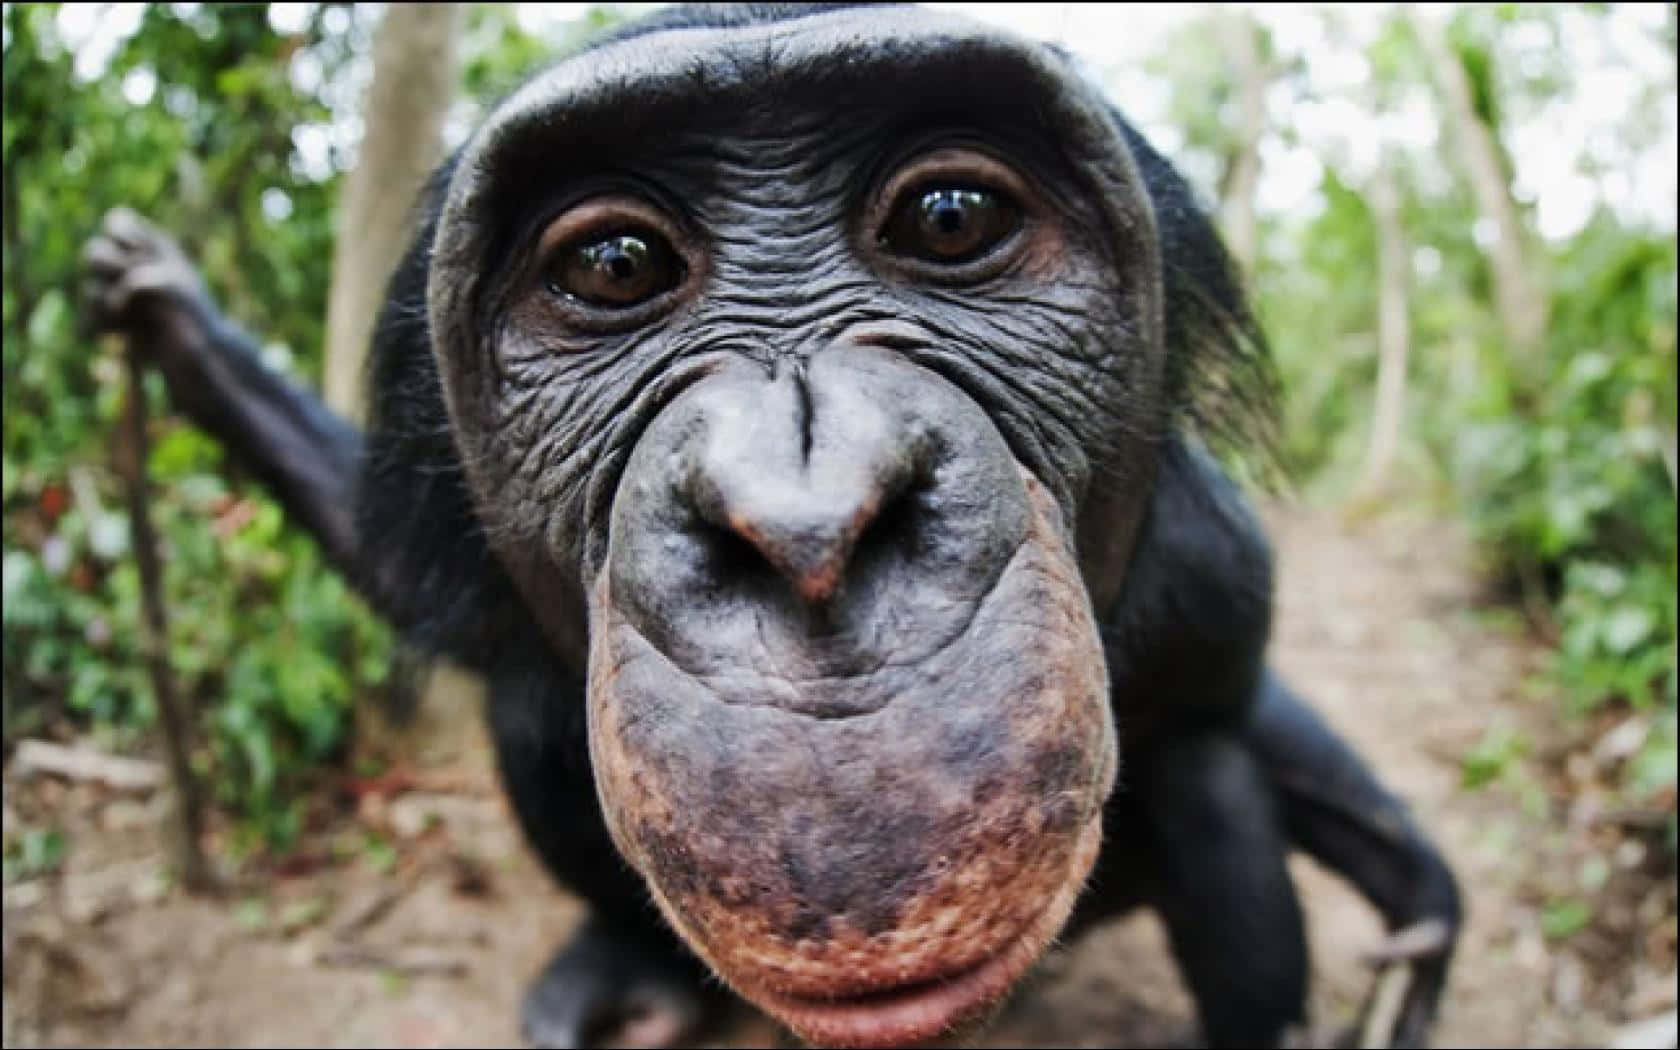 A Happy Chimpanzee Enjoying Nature